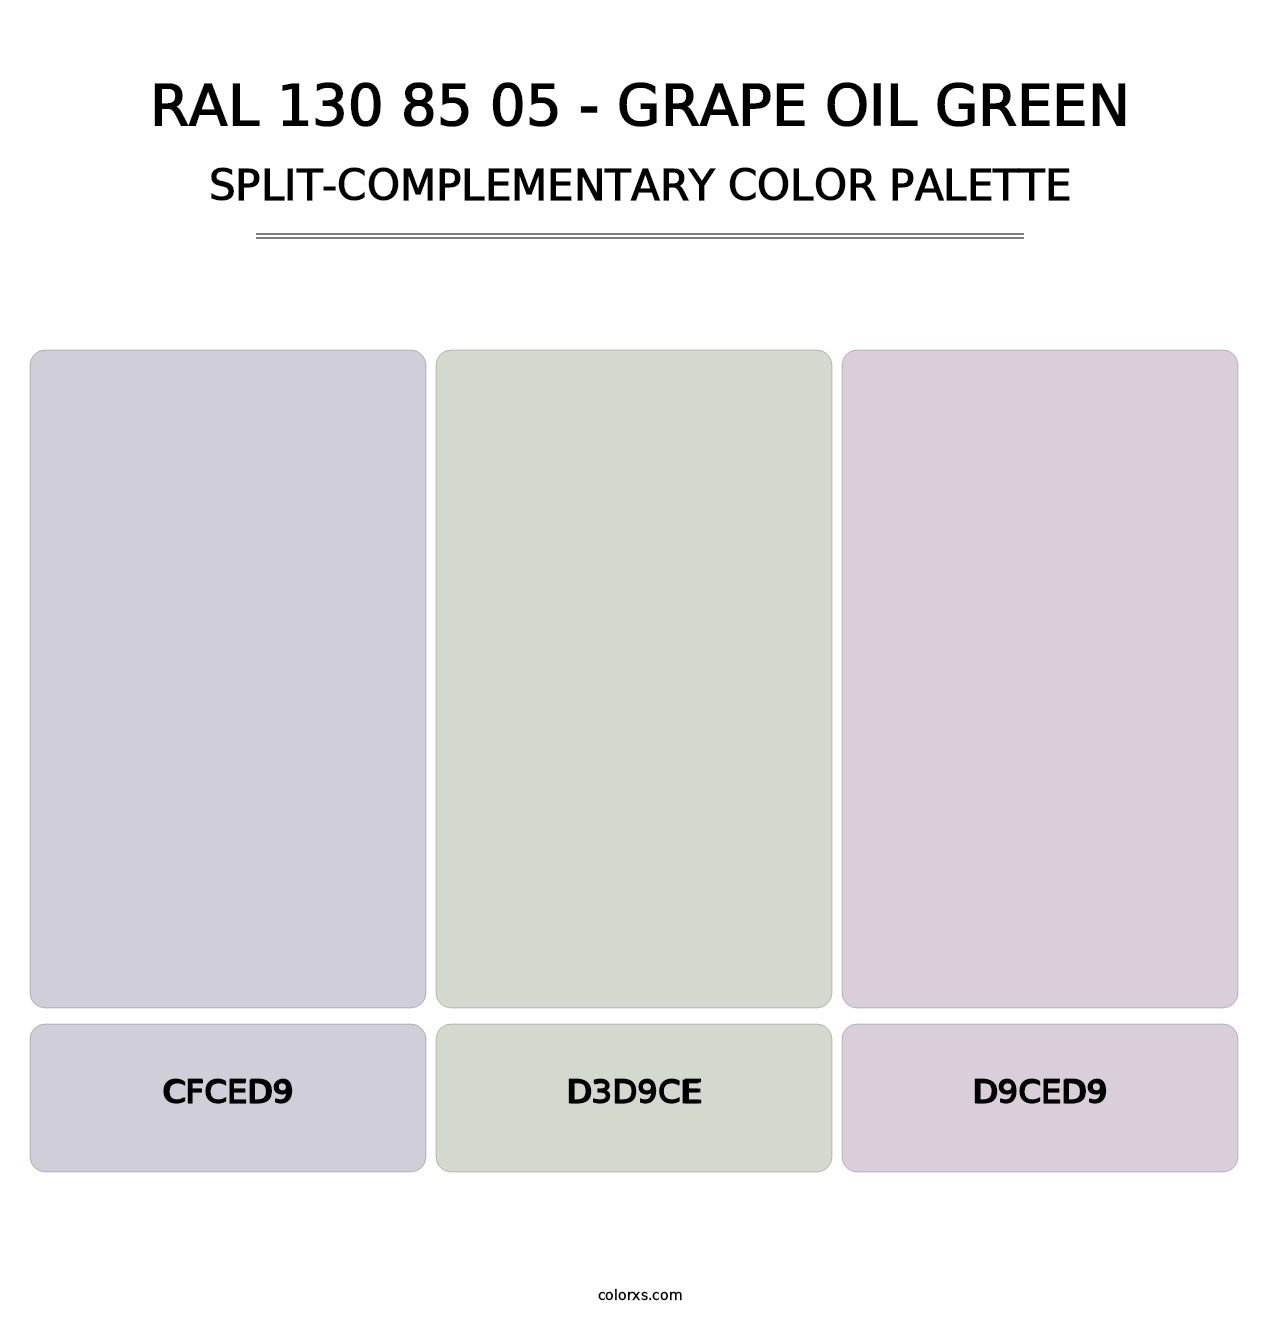 RAL 130 85 05 - Grape Oil Green - Split-Complementary Color Palette